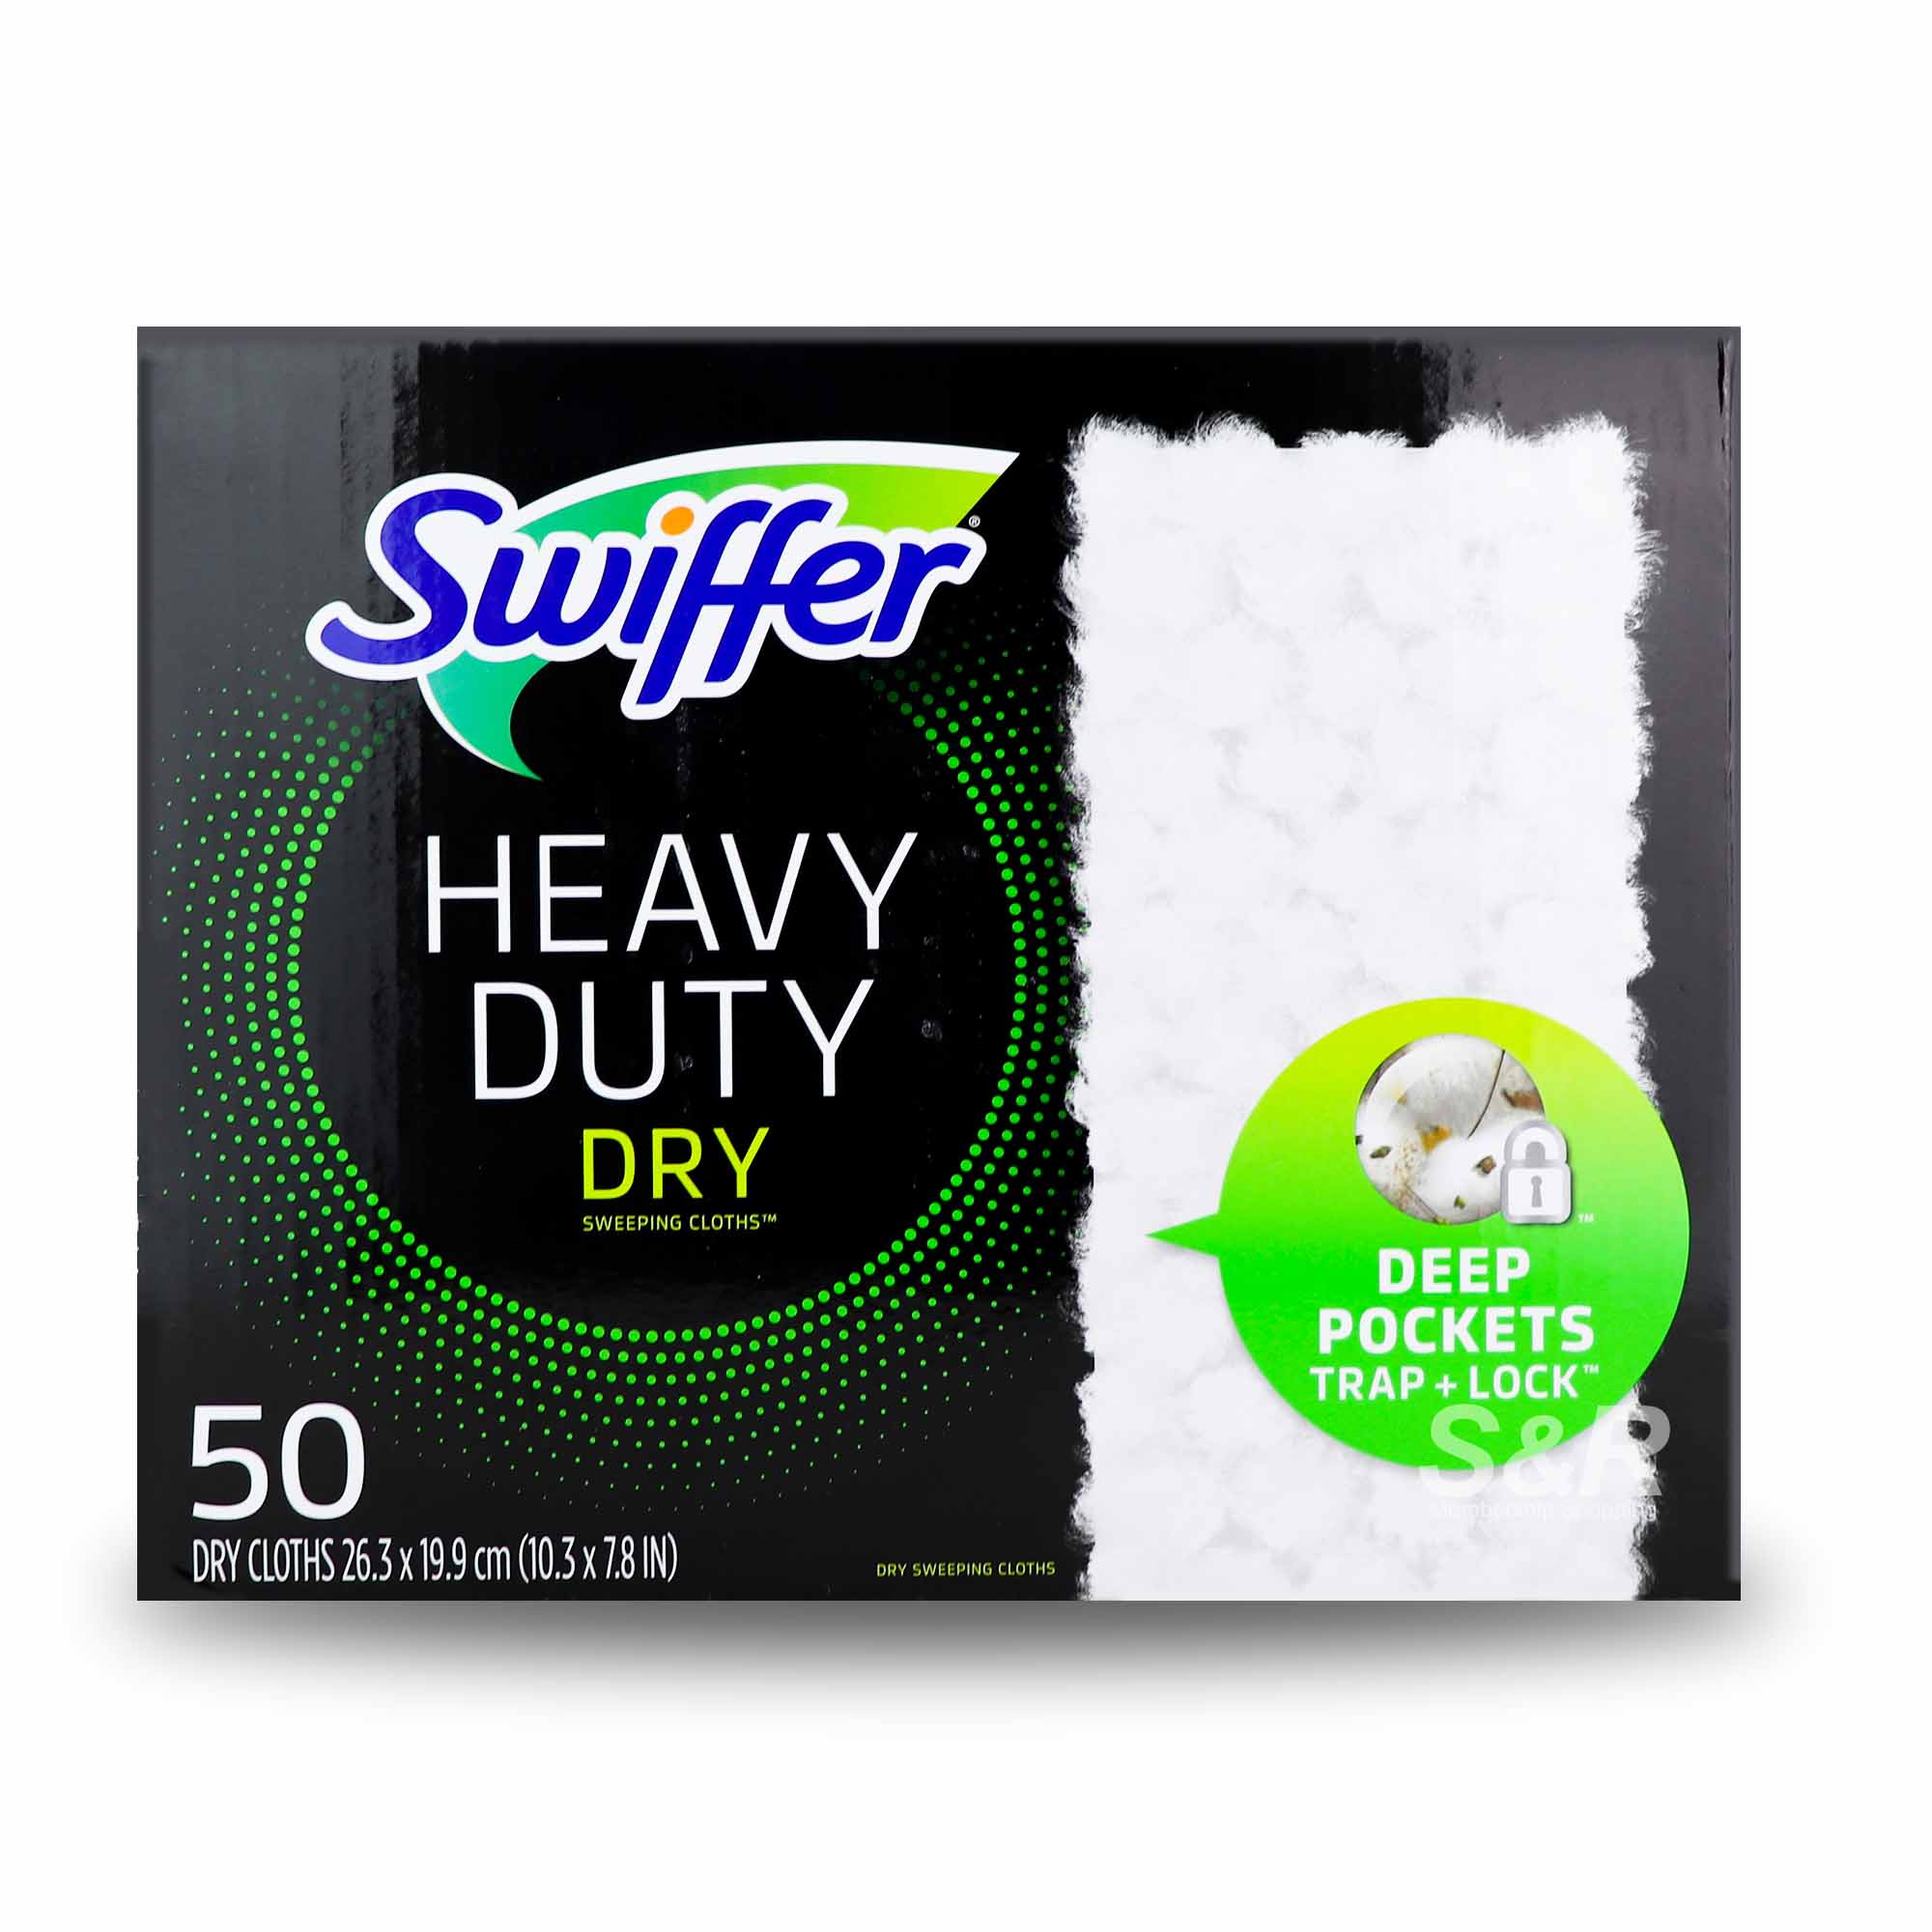 Swiffer Heavy Duty Dry Sweeping Cloths 50pcs